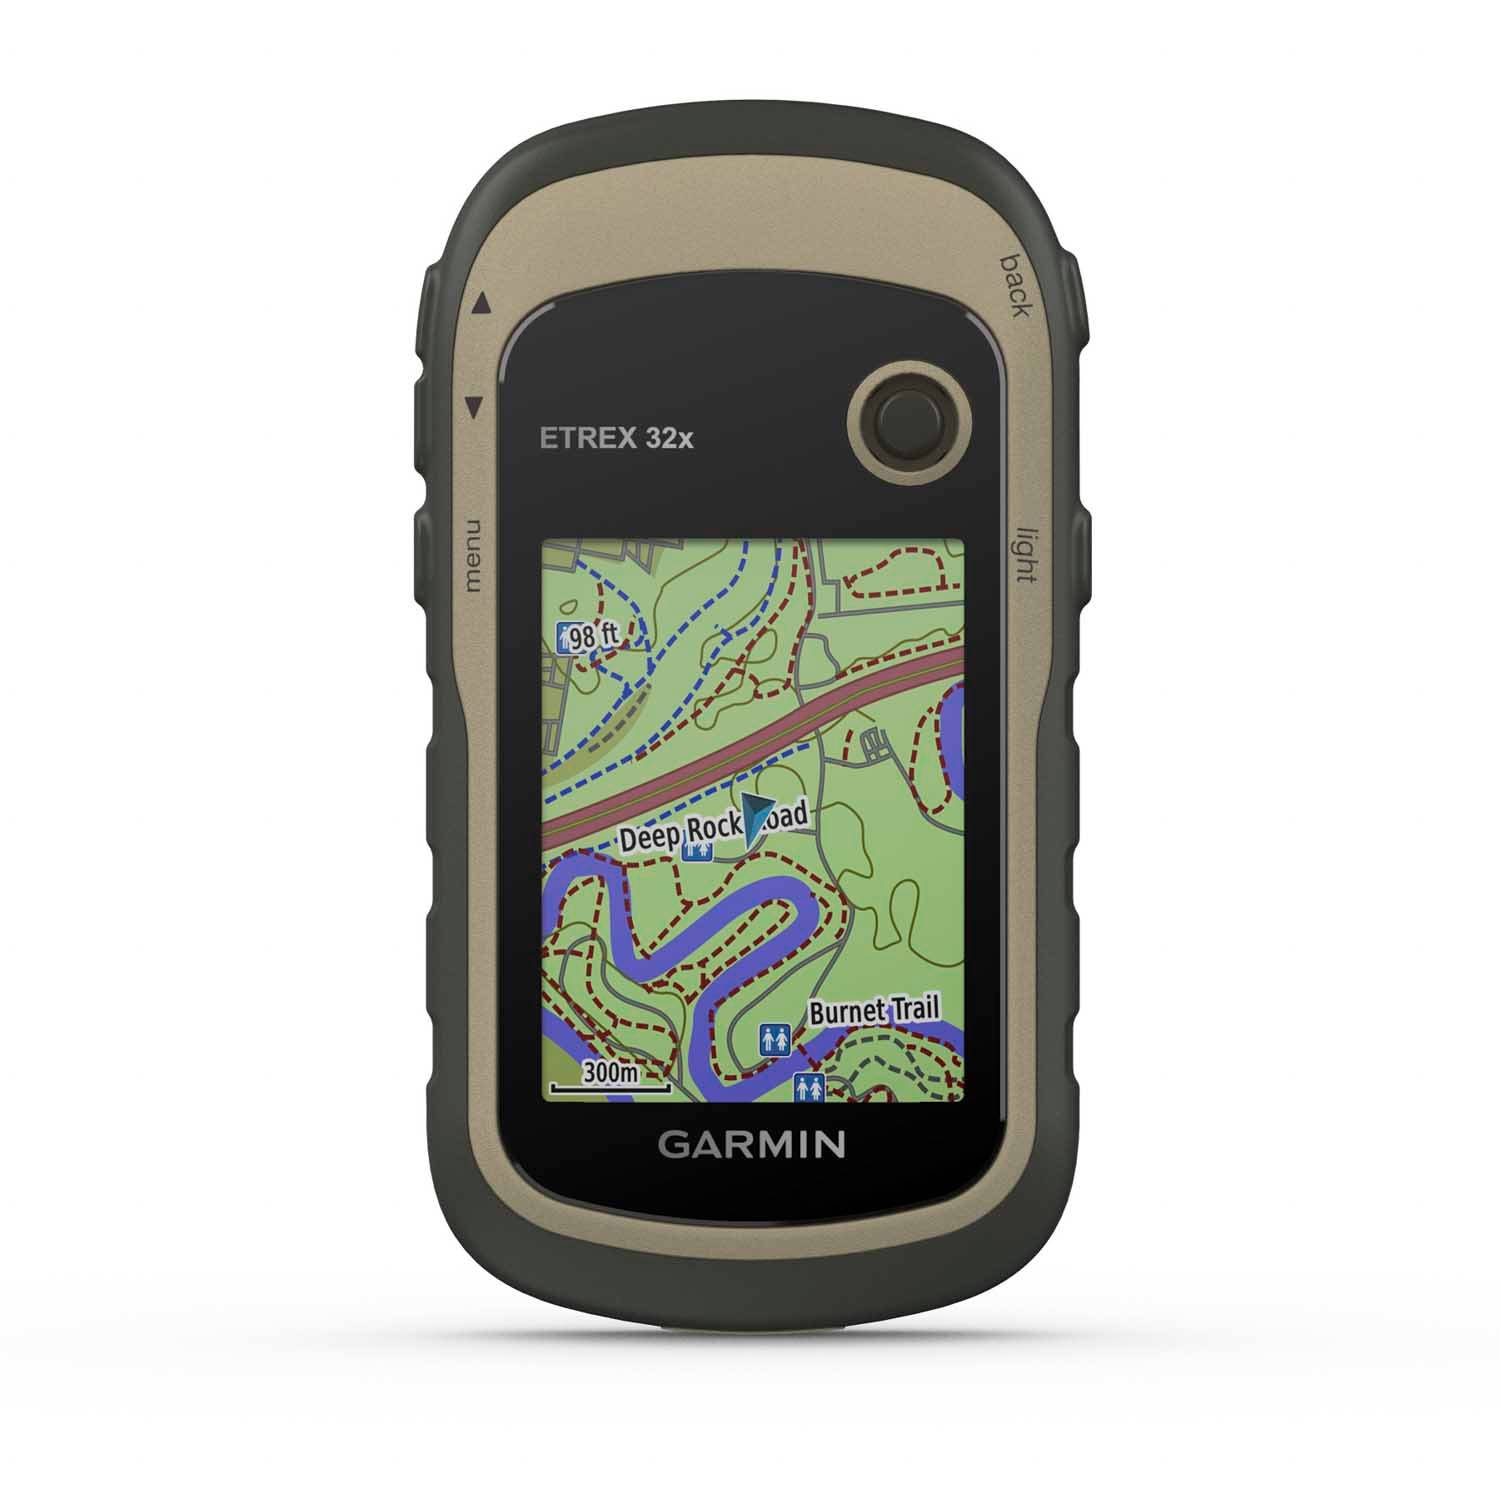 Garmin eTrex 32x Handheld GPS- Compass and Barometric Altime